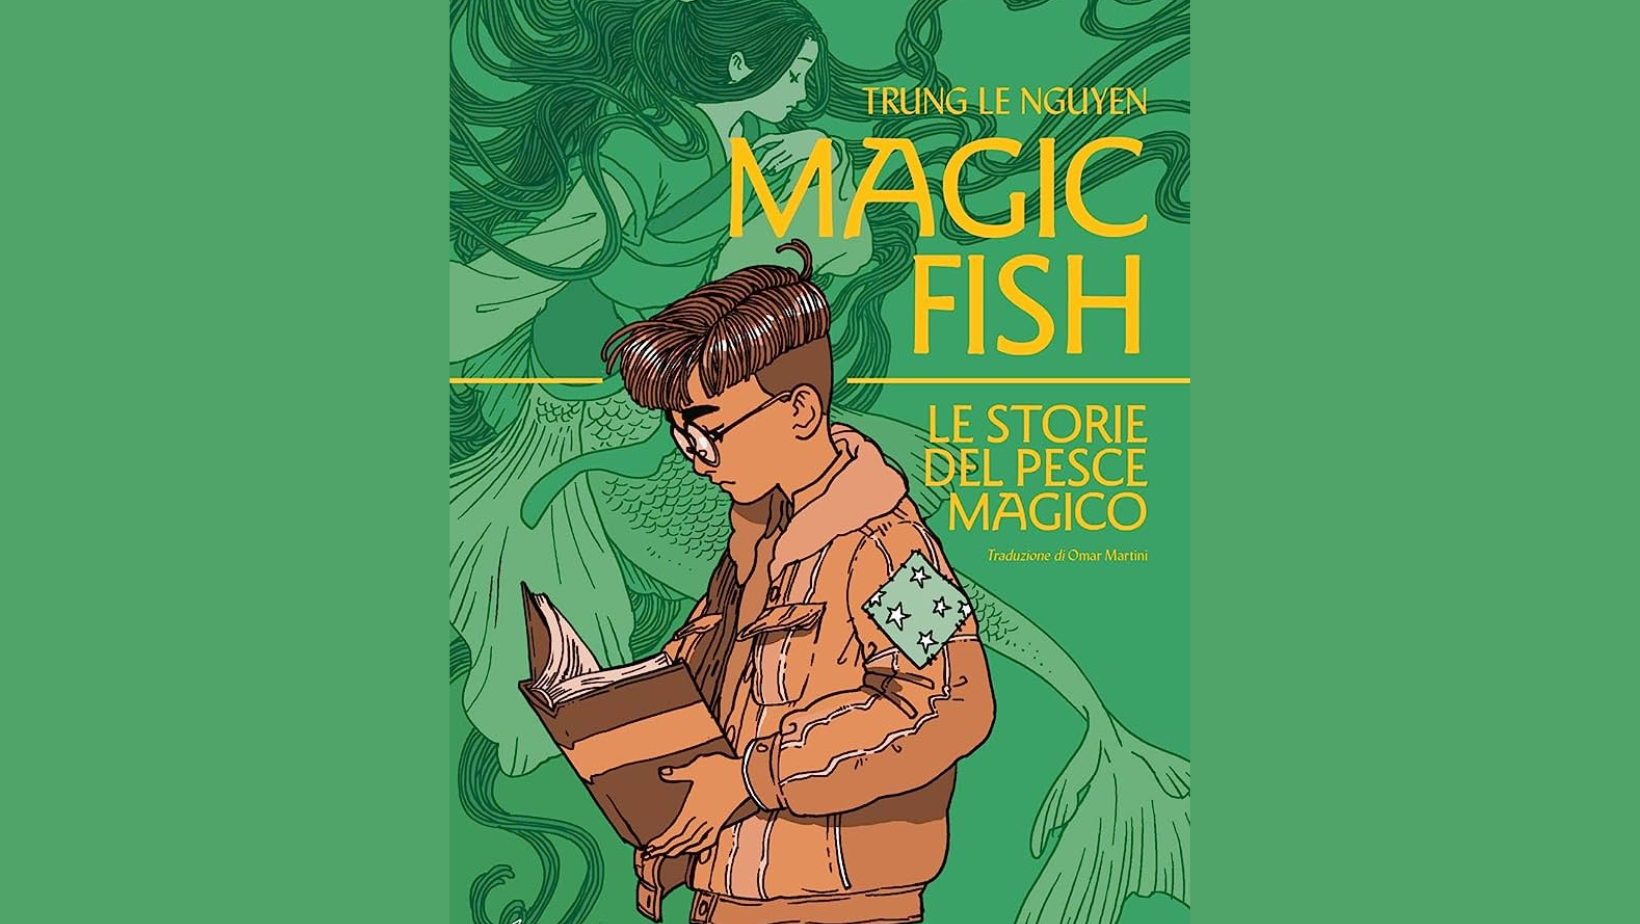 Magic fish